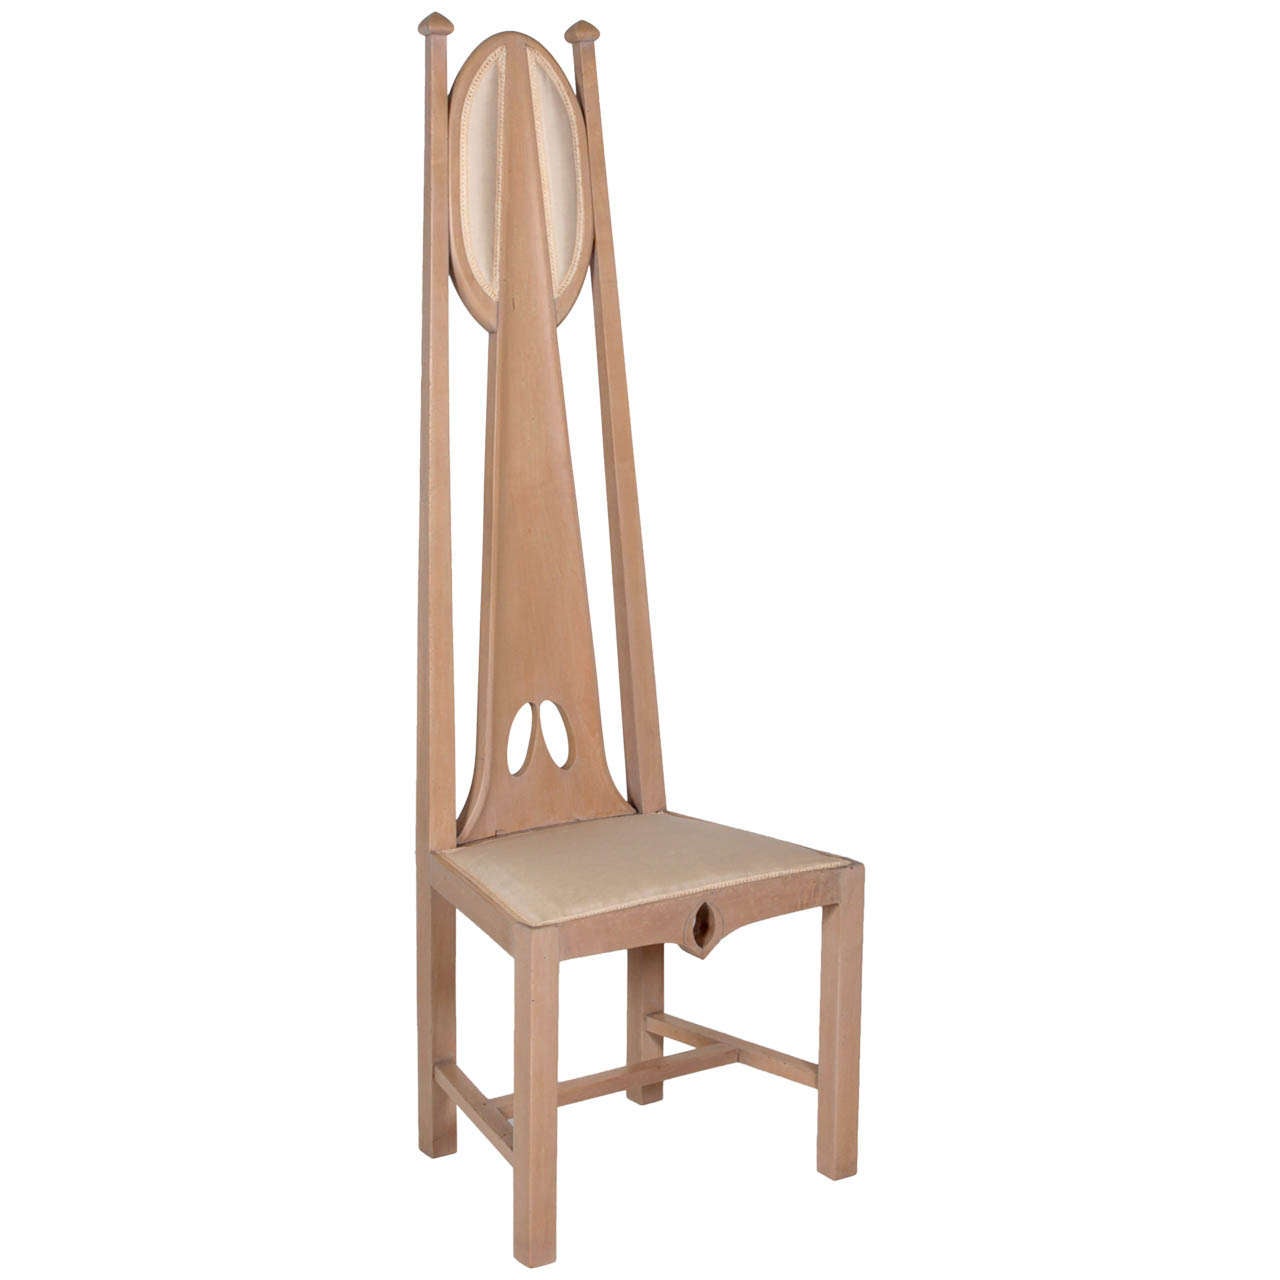 George Logan / Glasgow Style / British Arts & Crafts "The Grey Bower" chair c. 1905 For Sale